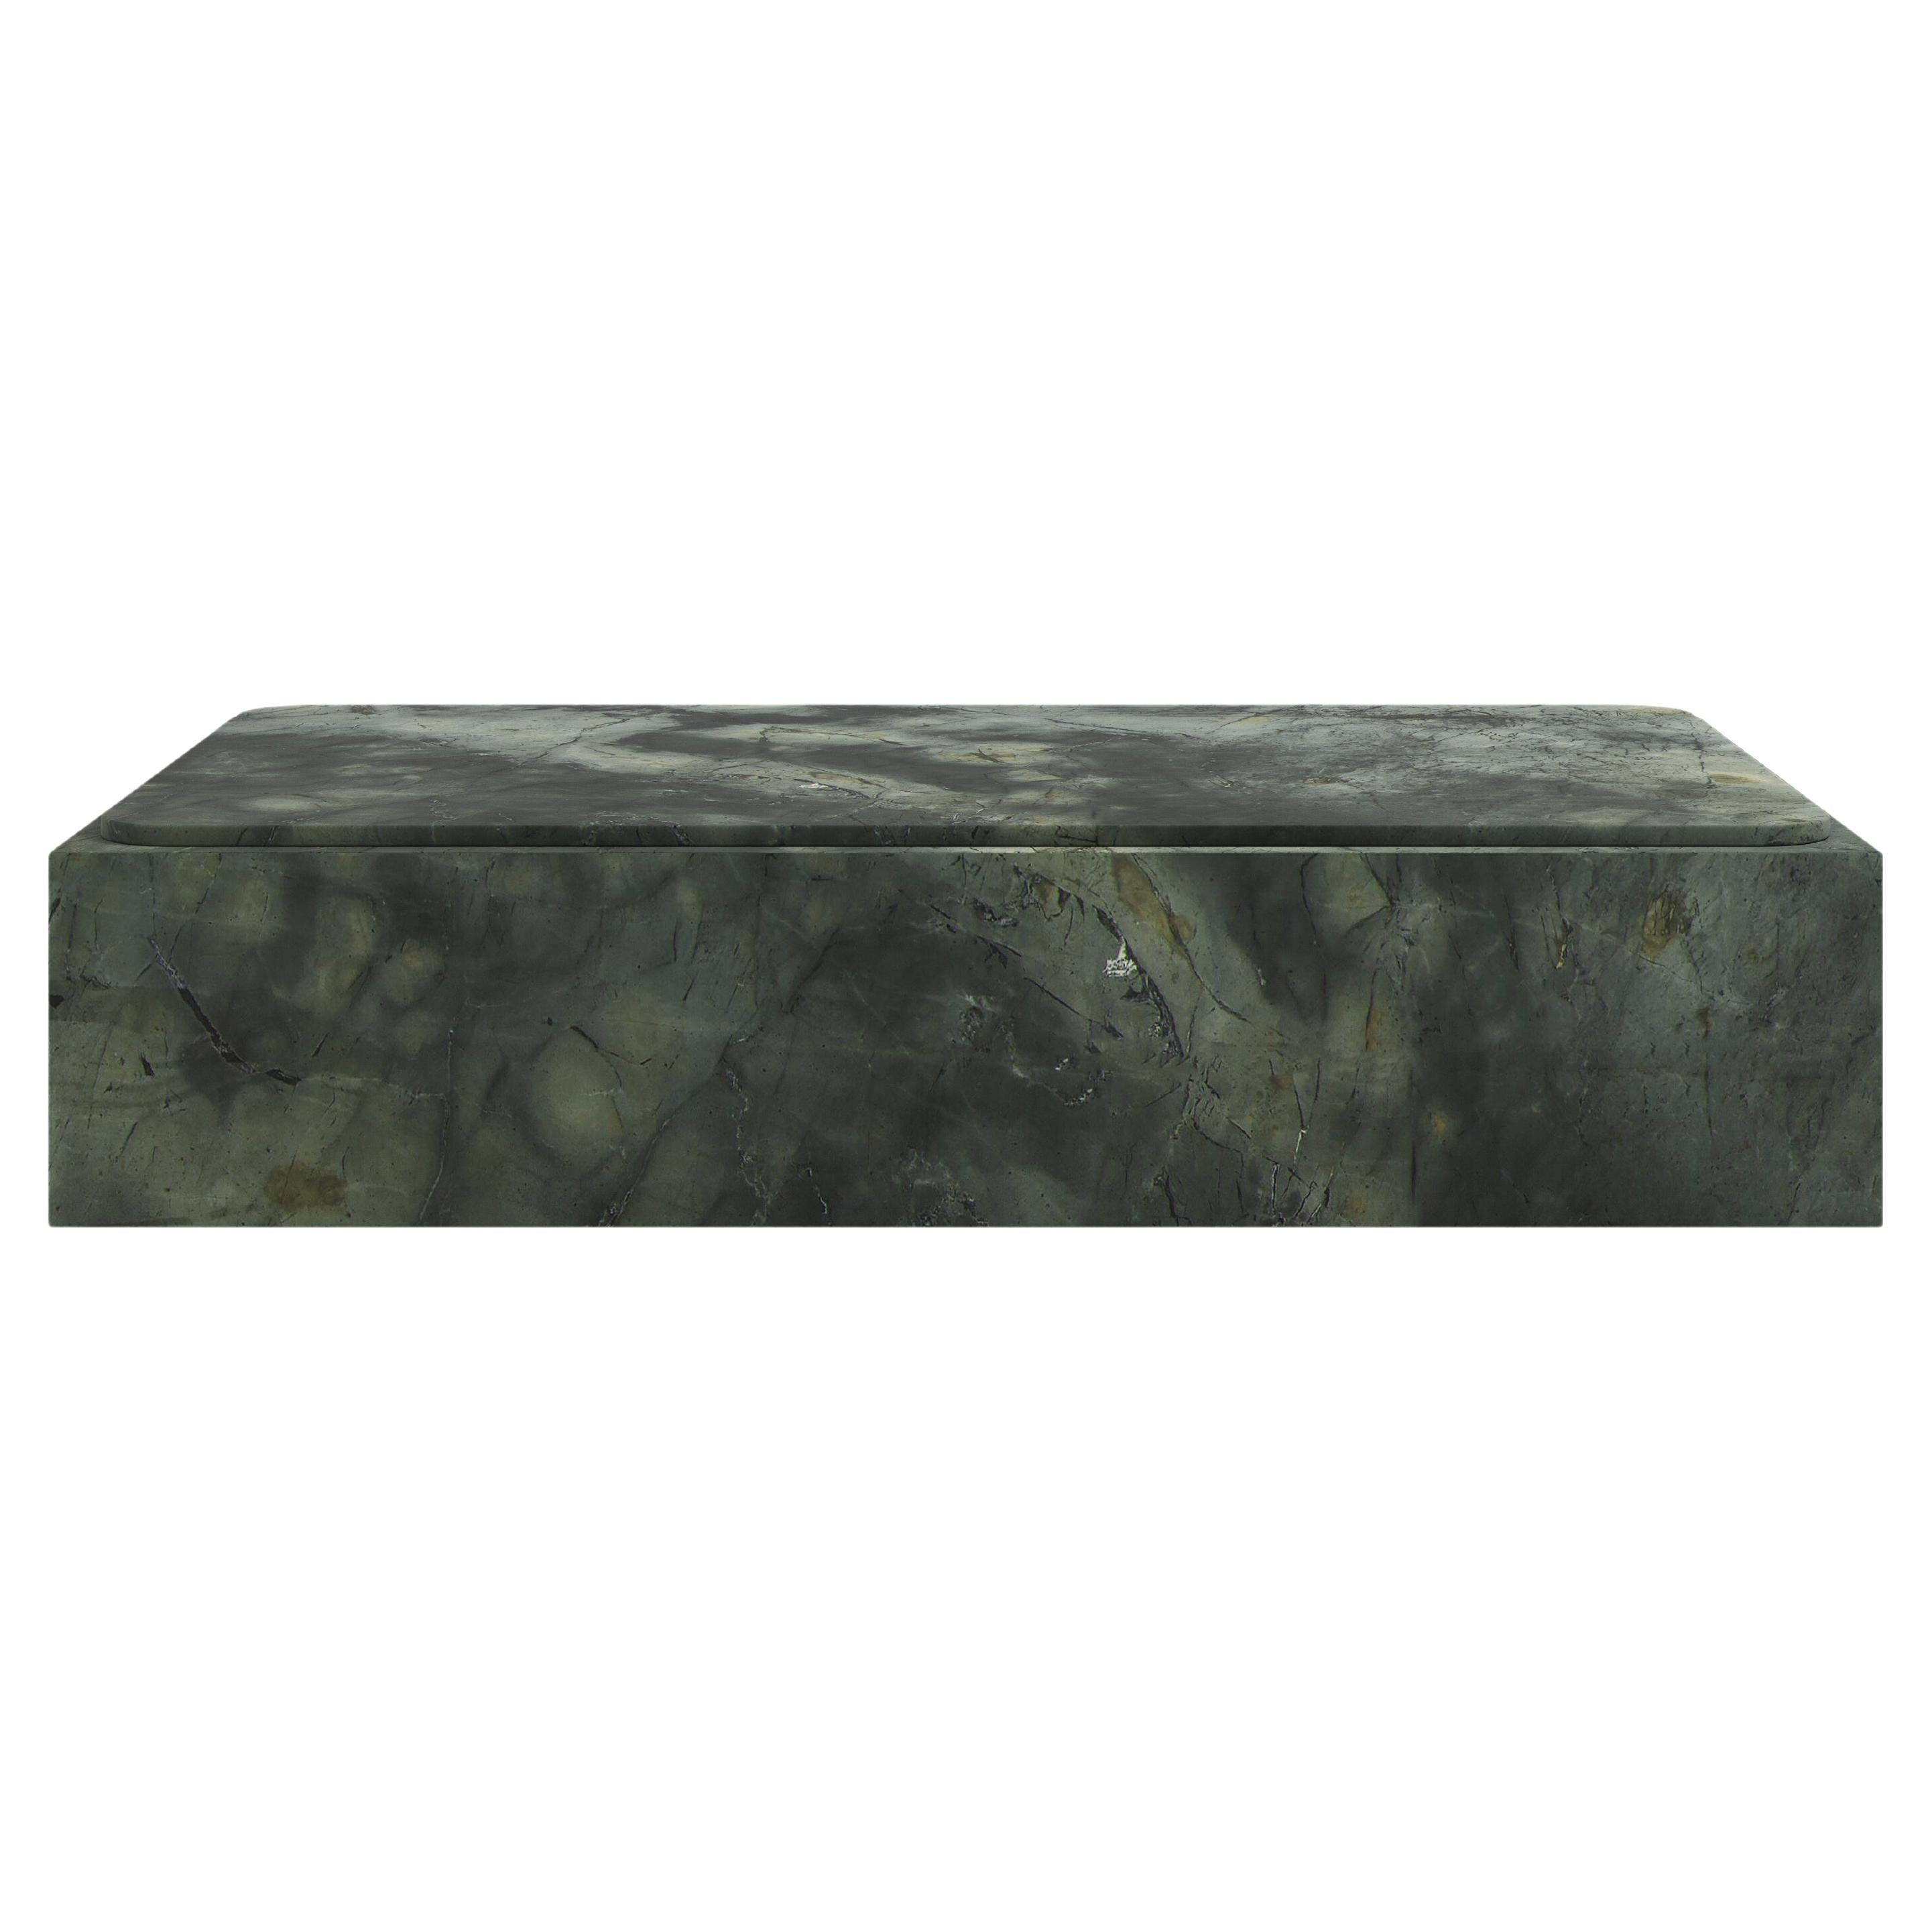 FORM(LA) Cubo Rectangle Plinth Coffee Table 72”L x 42”W x 13”H Edinburgh Marble For Sale